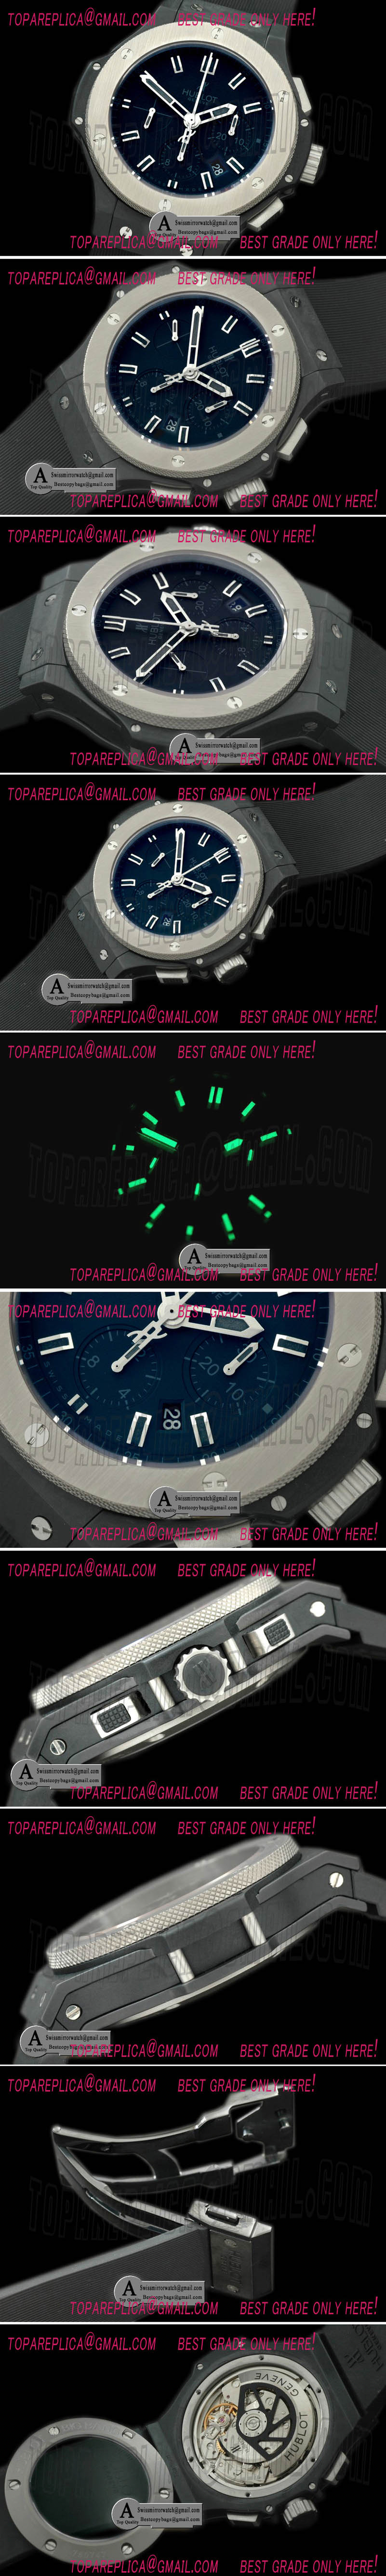 Hublot Classic Fusion 45MM Chrono PVD/Leather All Black A-7750 Sec@3 Replica Watches